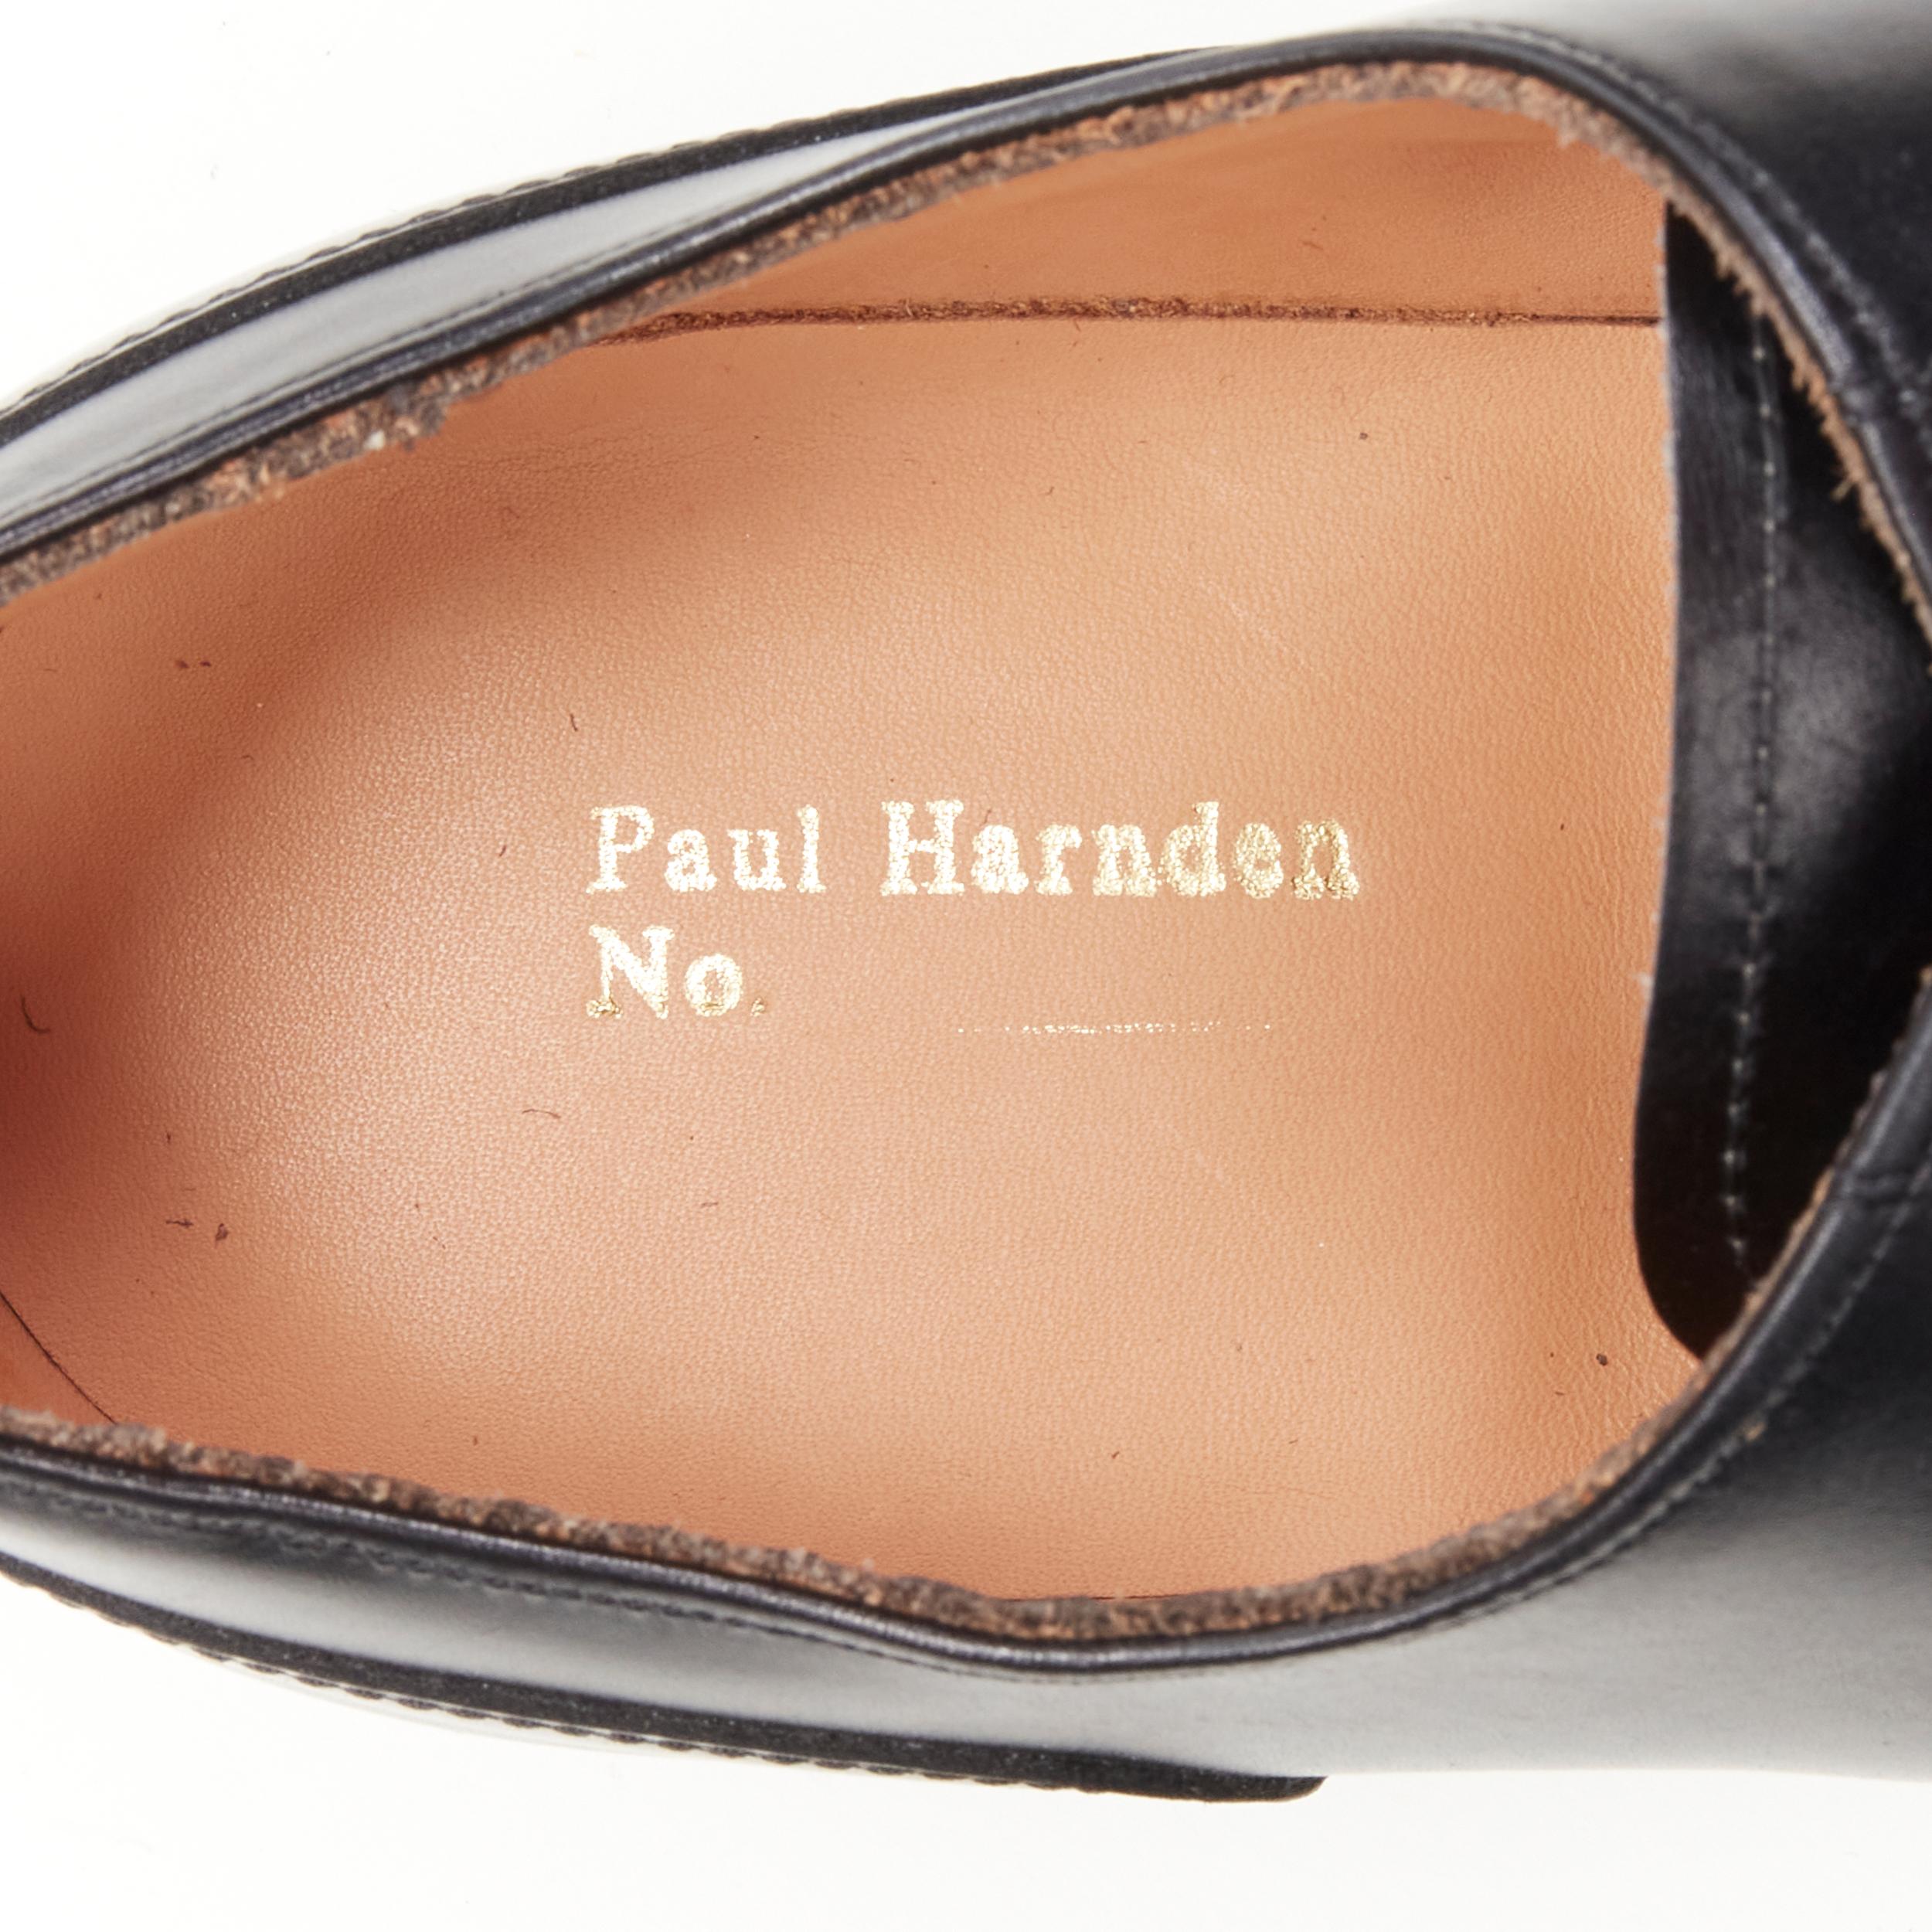 new PAUL HARNDEN SHOEMAKERS black calf leather Welted Derby shoe UK7 EU41 1